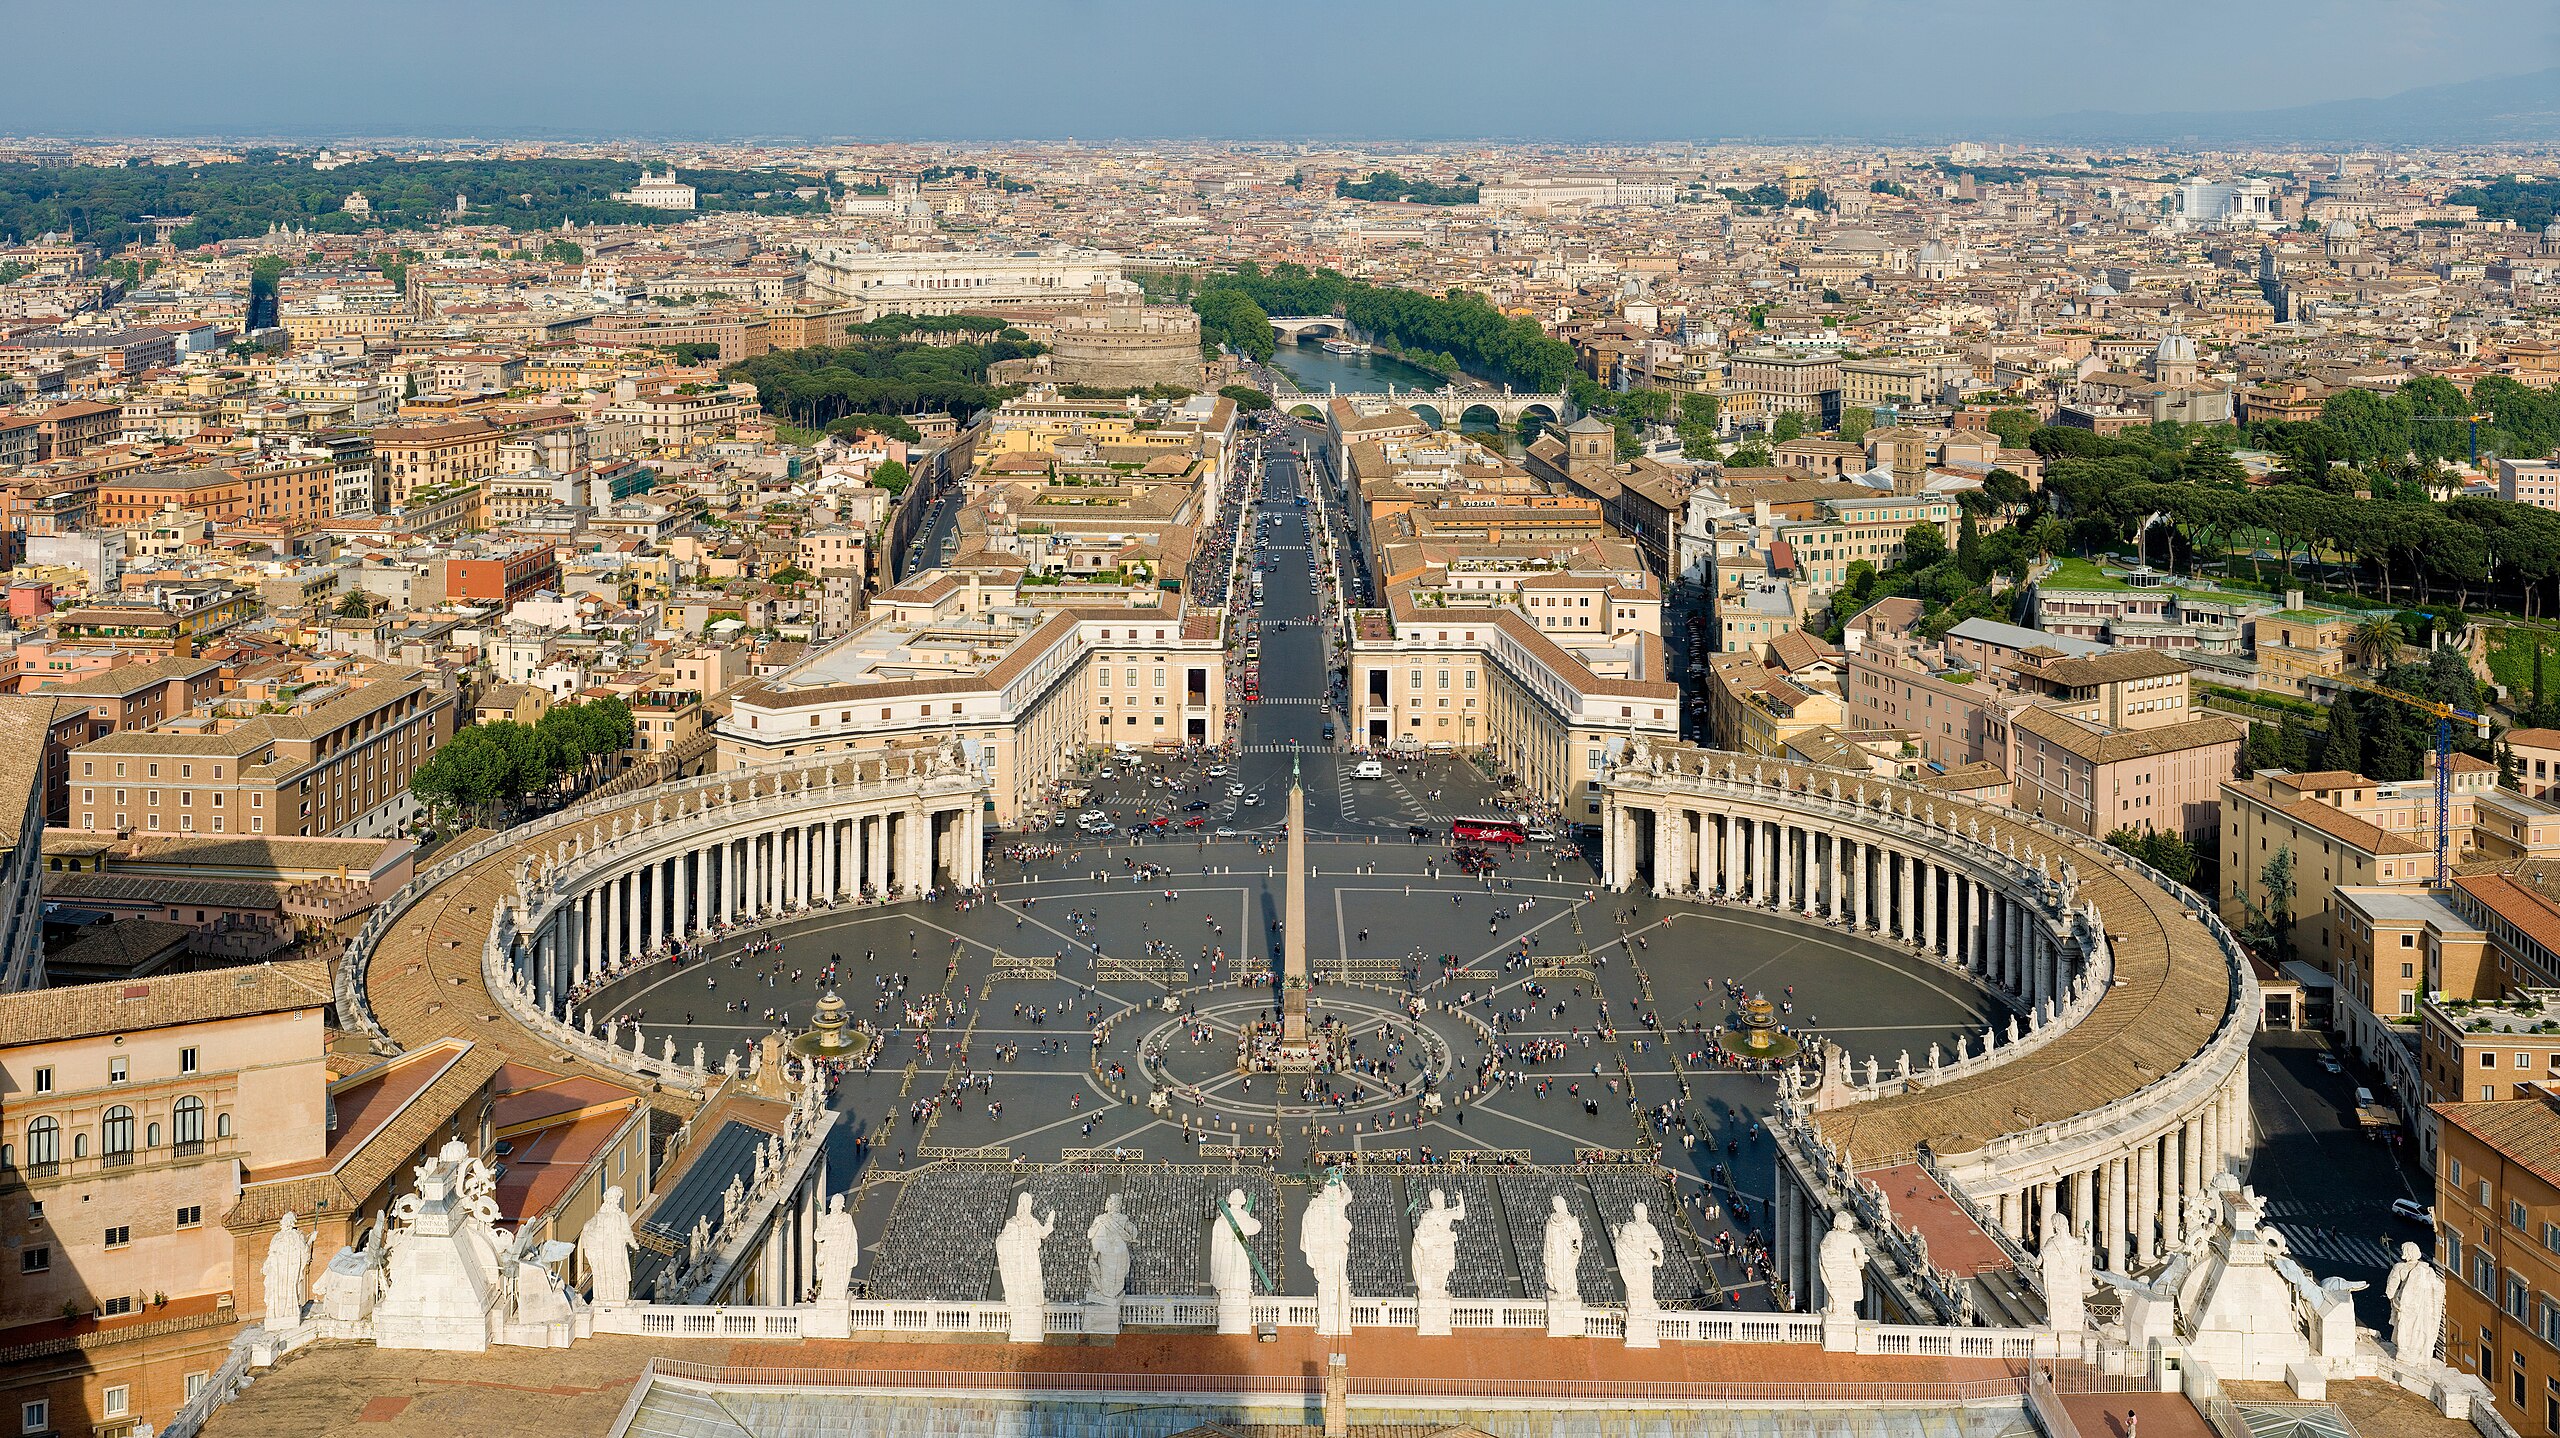 Bild: https://upload.wikimedia.org/wikipedia/commons/thumb/d/d6/St_Peter%27s_Square%2C_Vatican_City_-_April_2007.jpg/2560px-St_Peter%27s_Square%2C_Vatican_City_-_April_2007.jpg